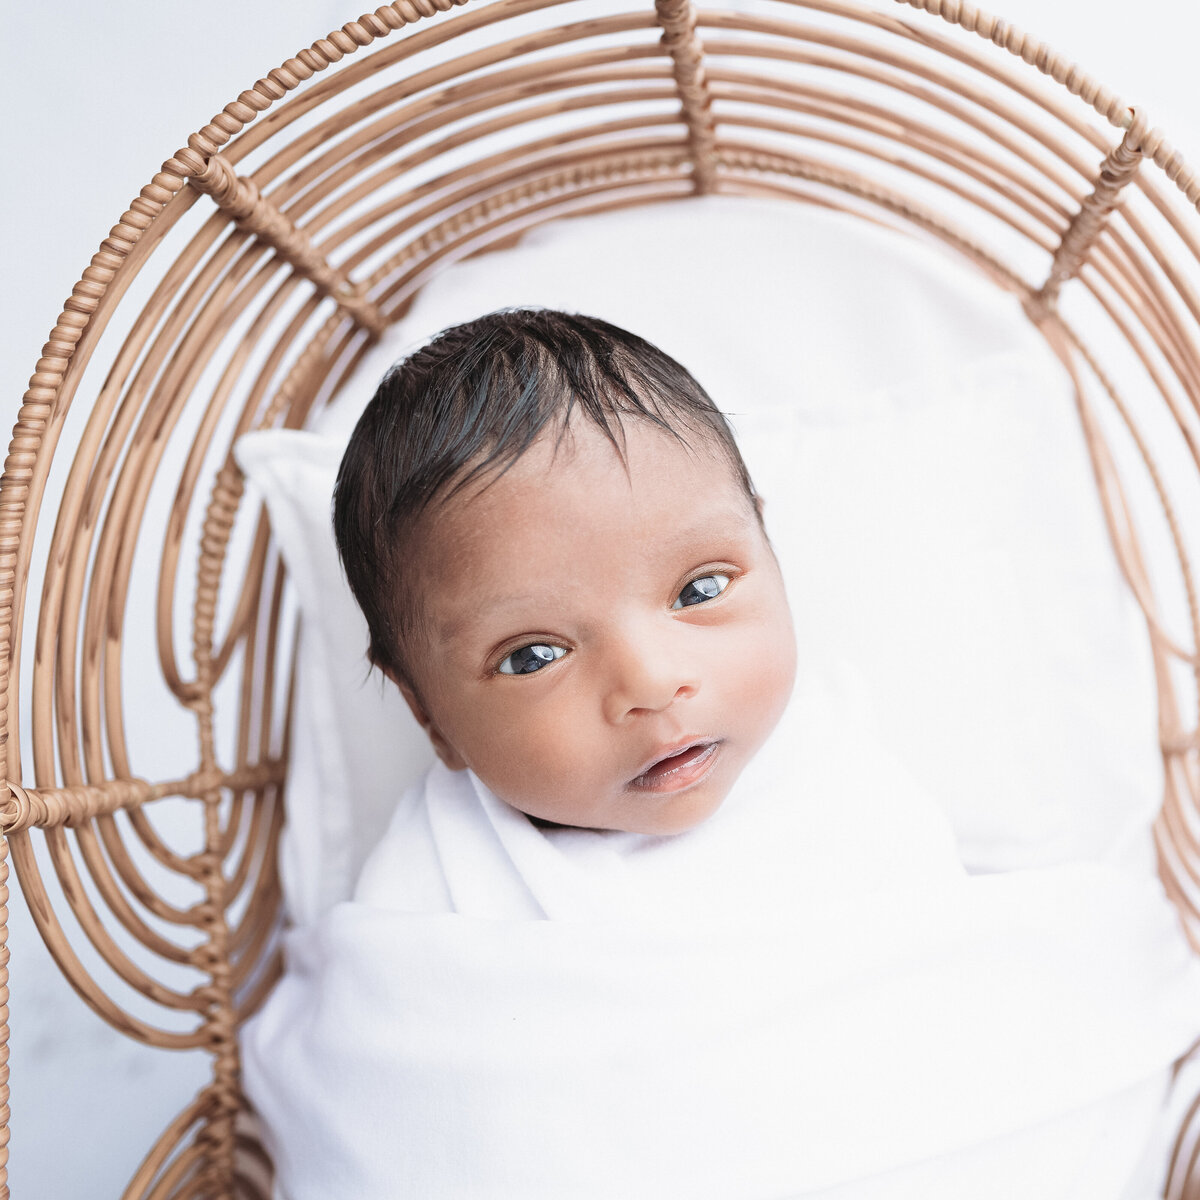 Image is of an awake newborn baby in a bamboo bassinet prop. Studio image by Lauren Vanier Photography